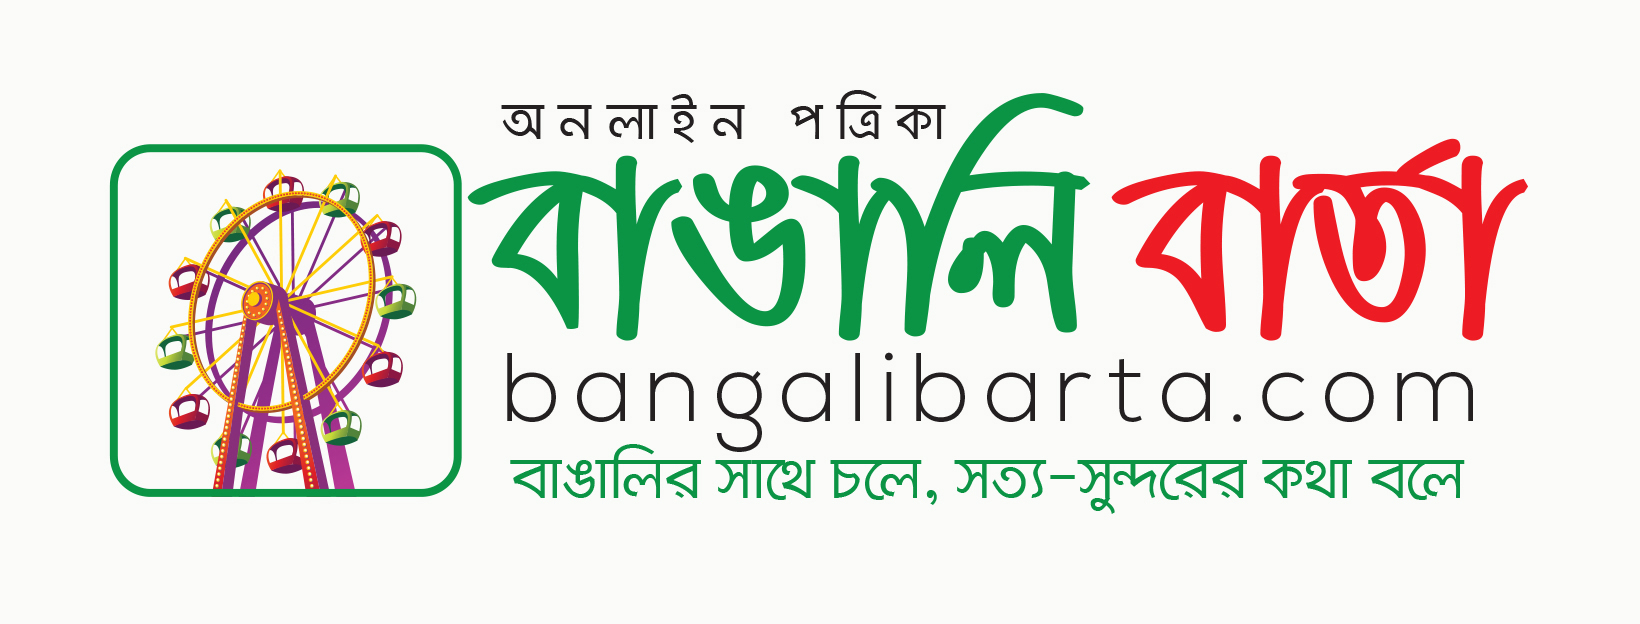 Bangali Barta